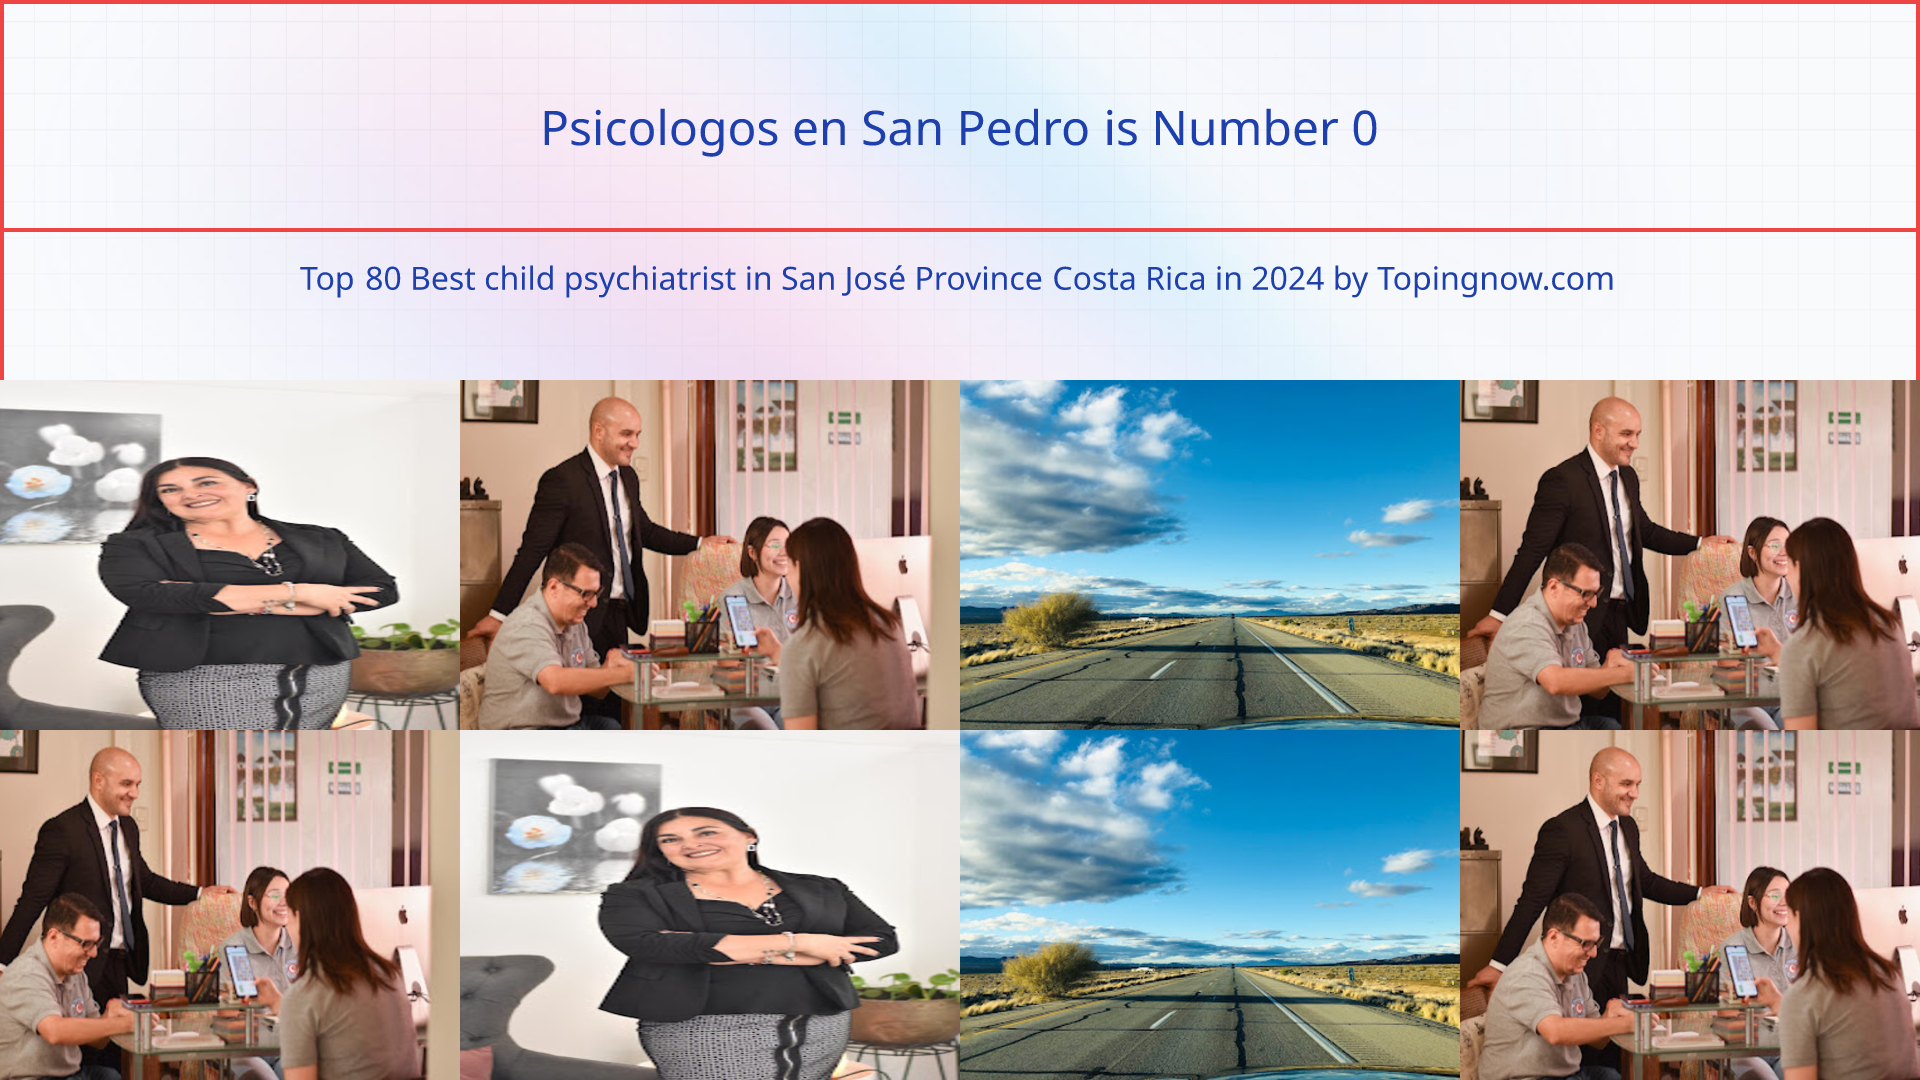 Psicologos en San Pedro: Top 80 Best child psychiatrist in San José Province Costa Rica in 2024